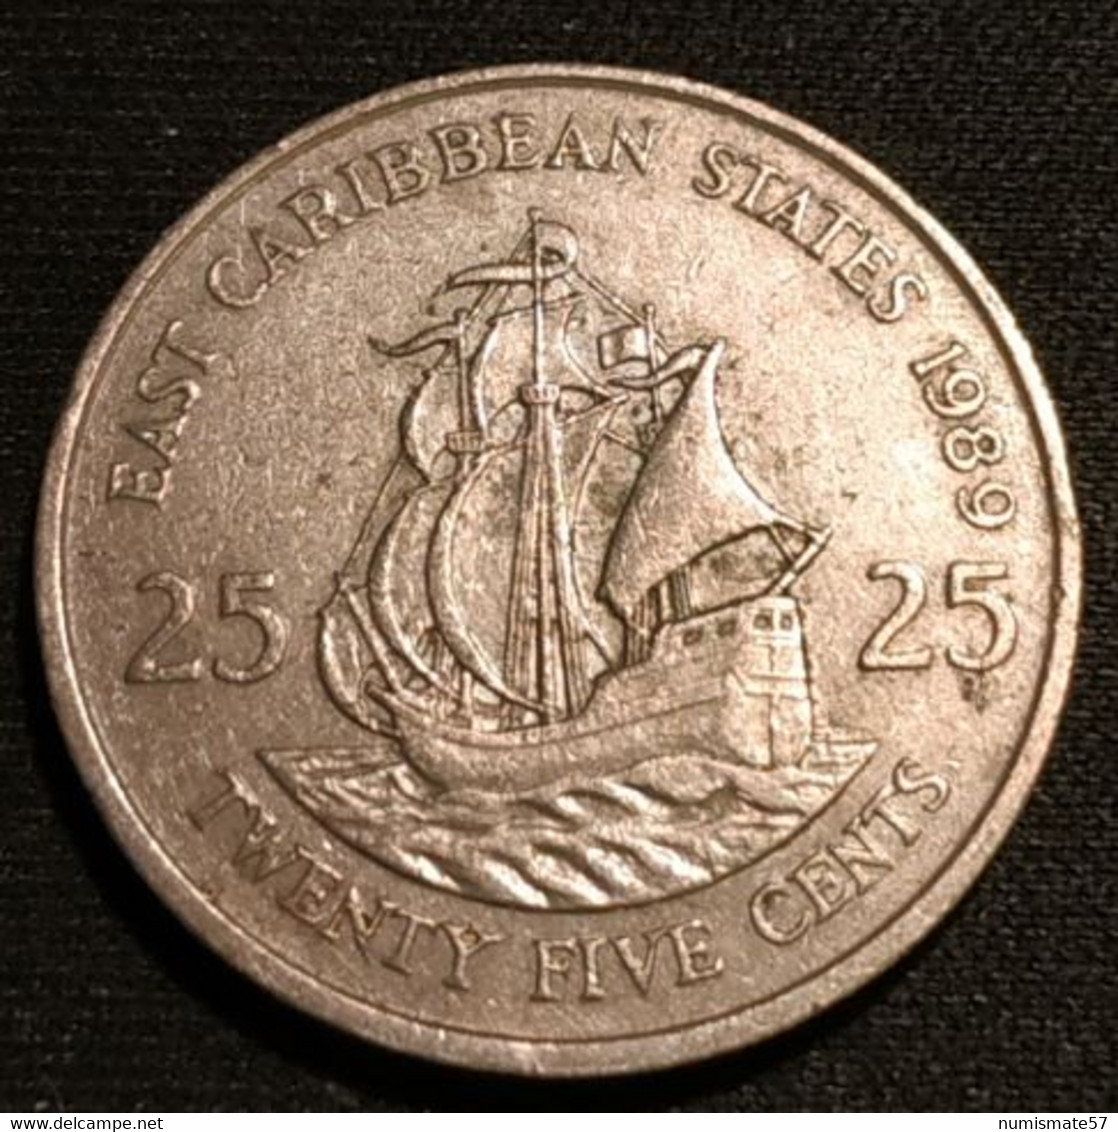 EAST CARIBBEAN STATES - 25 CENTS 1989 - Elizabeth II - 2e Effigie - KM 14 - Caraïbes Orientales (Etats Des)